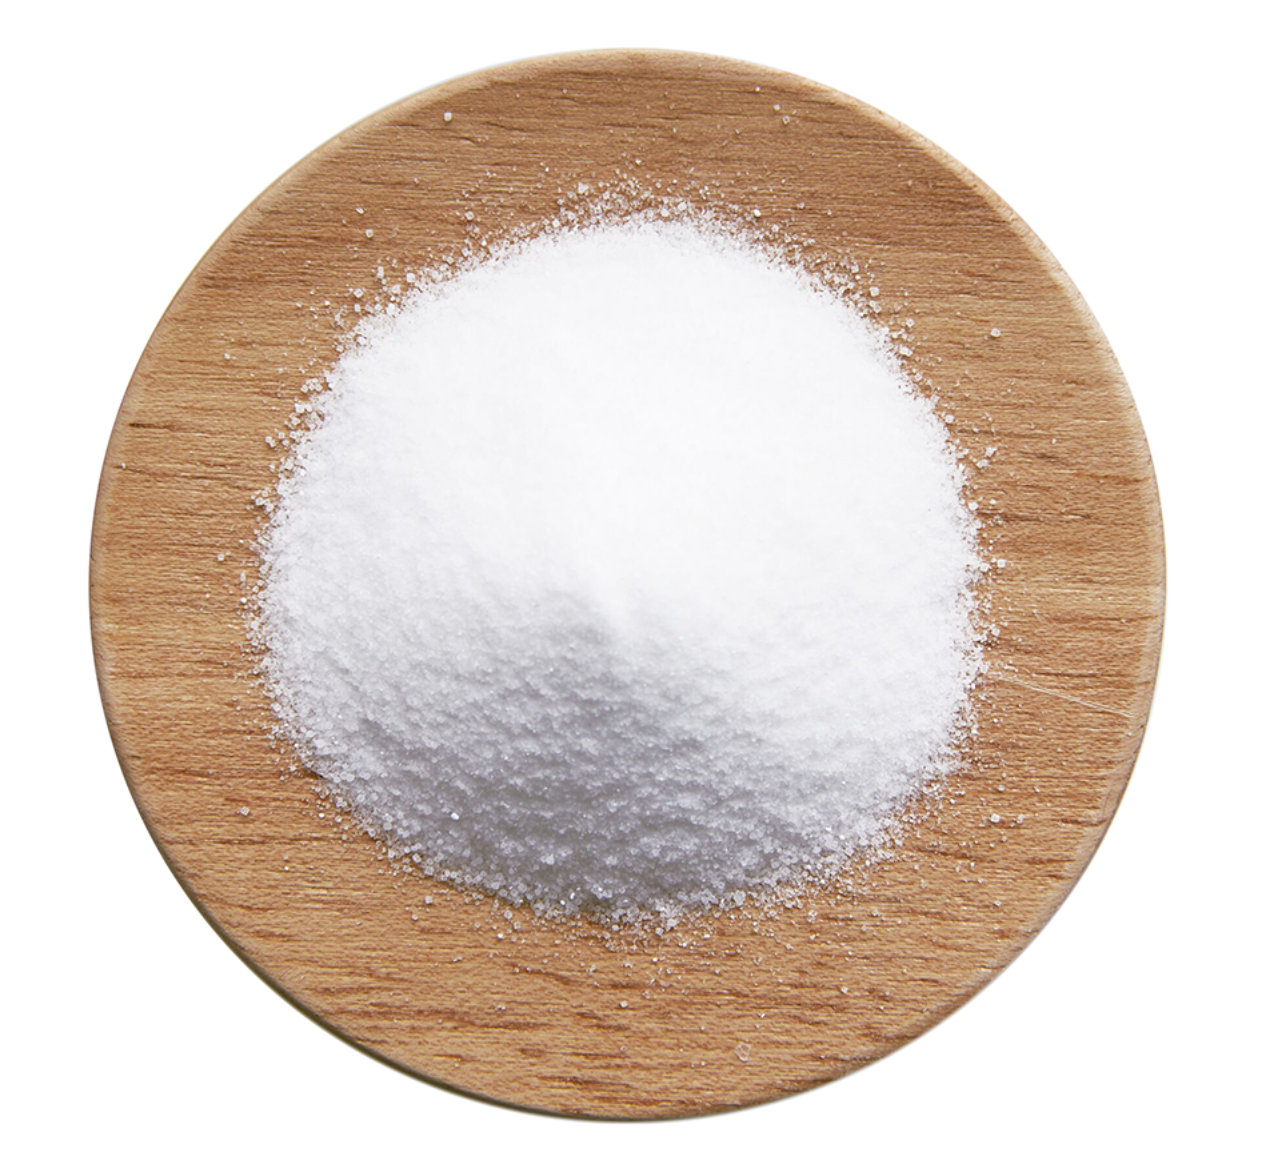 IP - Ideal Salt (large )